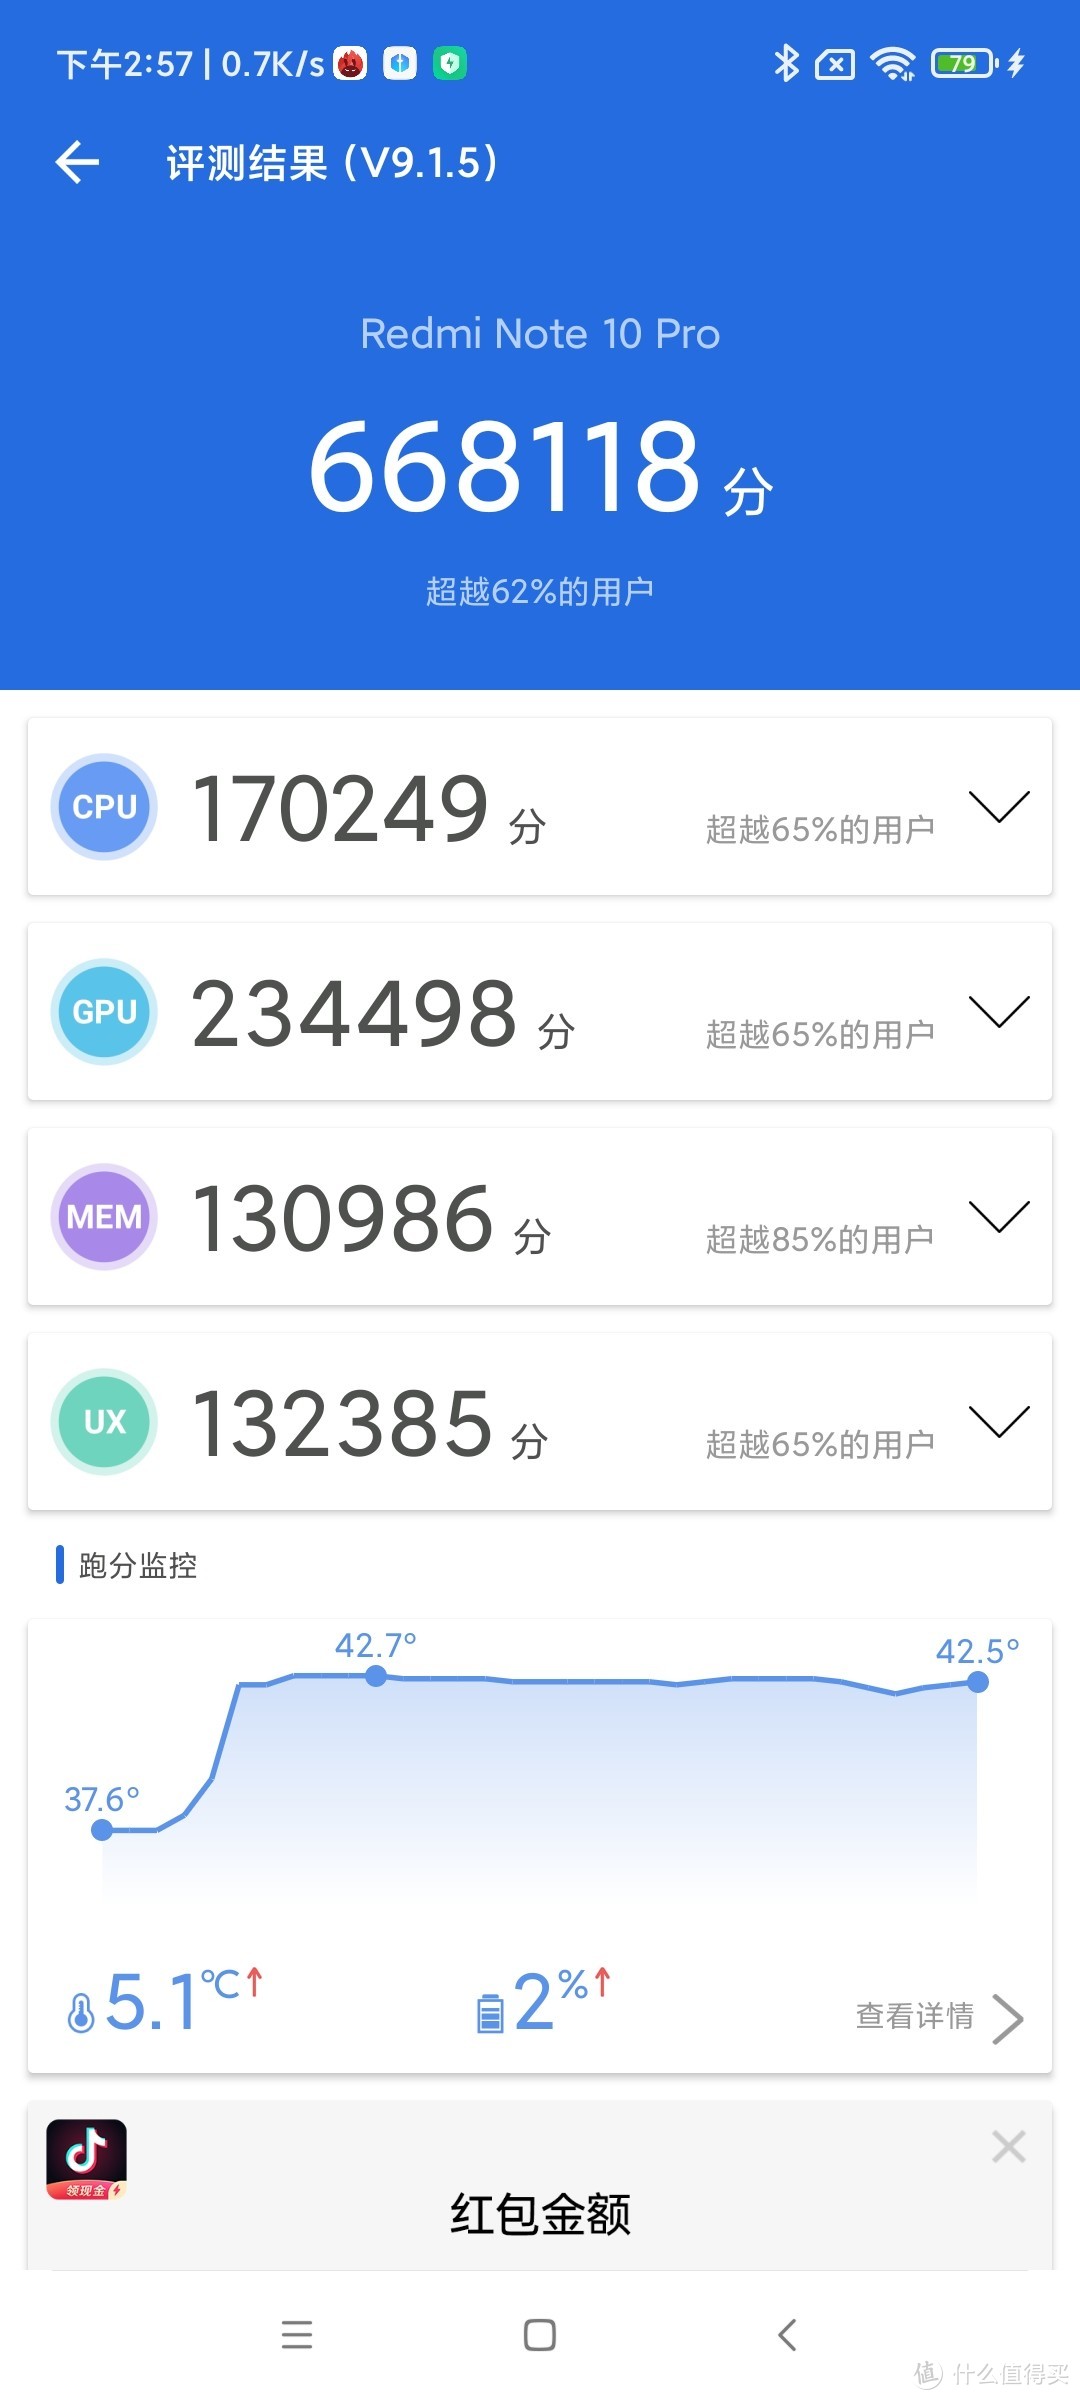 图书馆猿のRedmi Note 10 Pro 5G版 简单晒